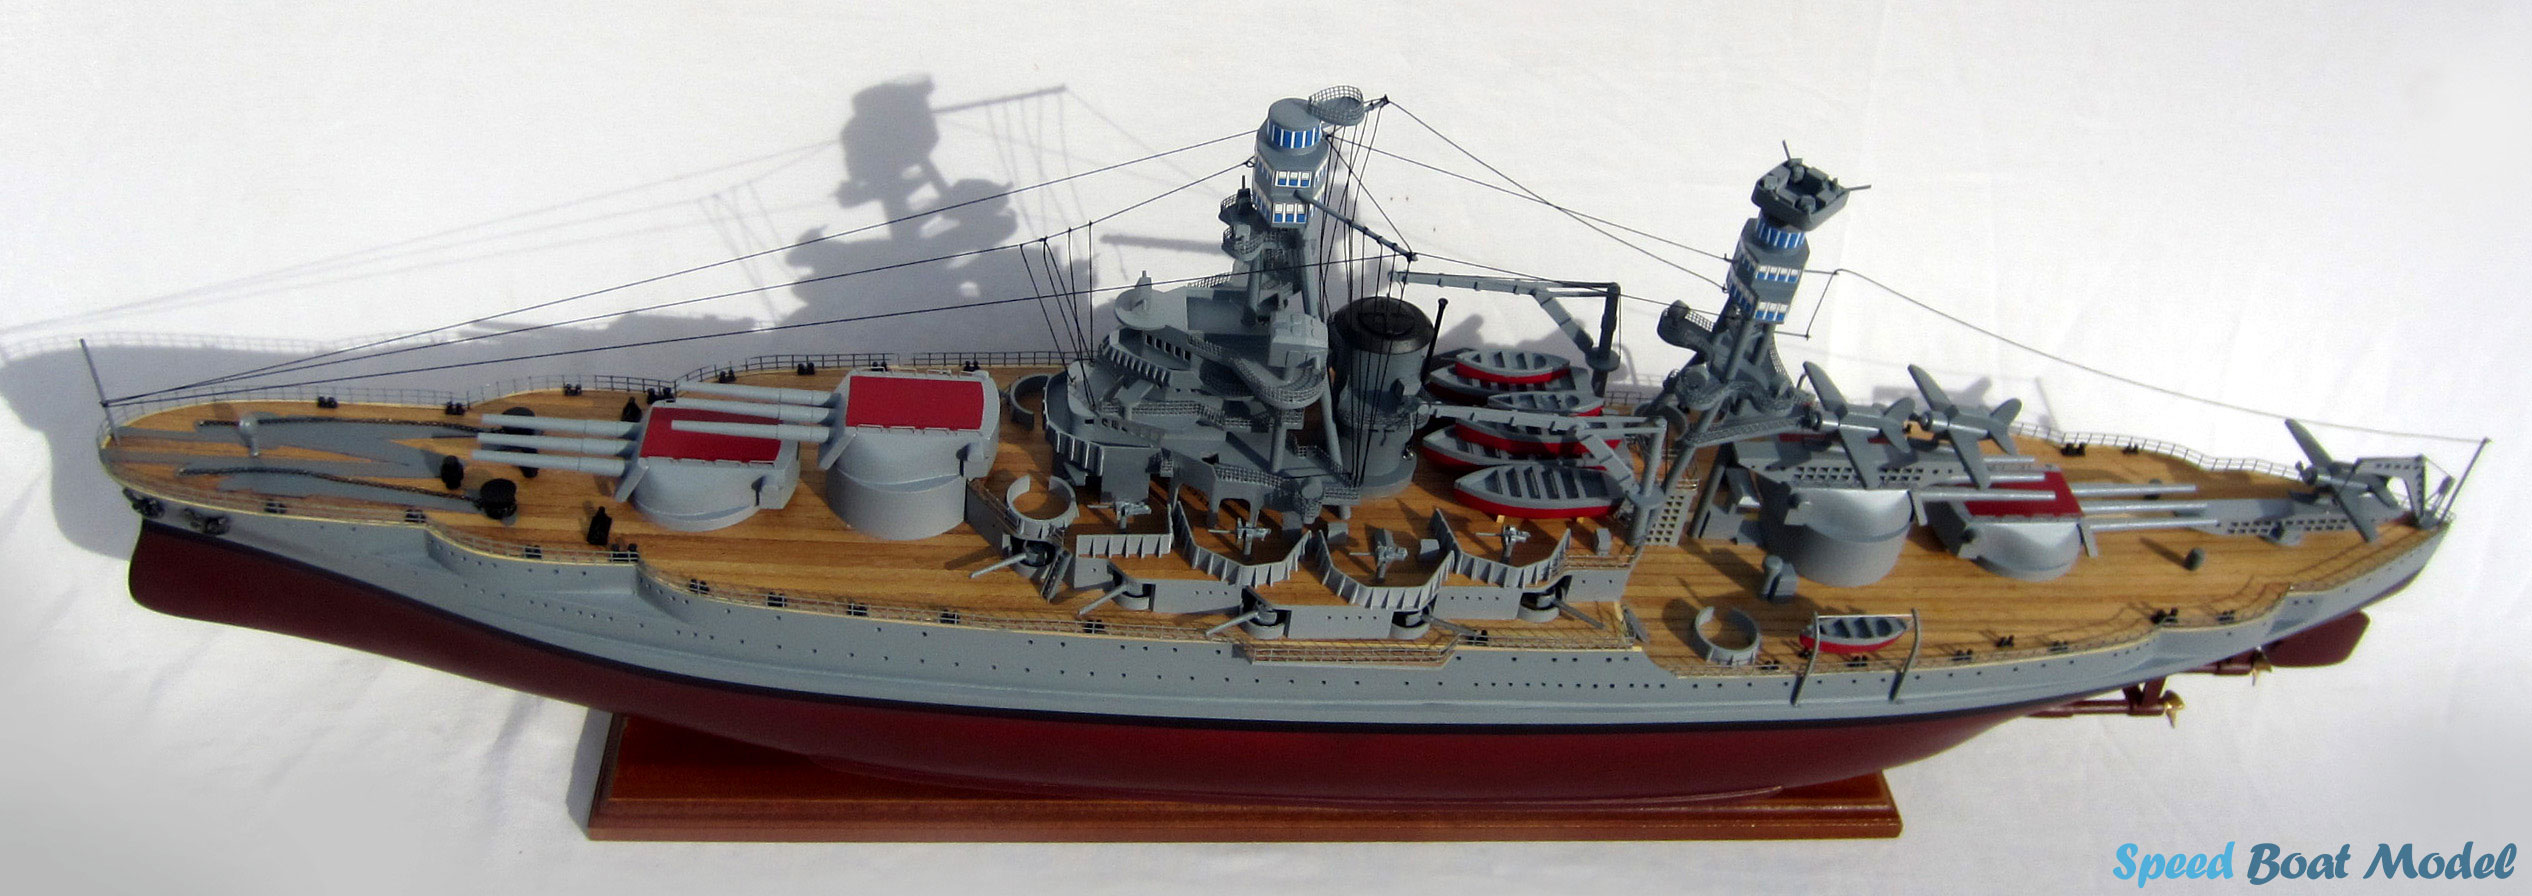 Uss Arizona WarShip Model 39.3" - Option 2